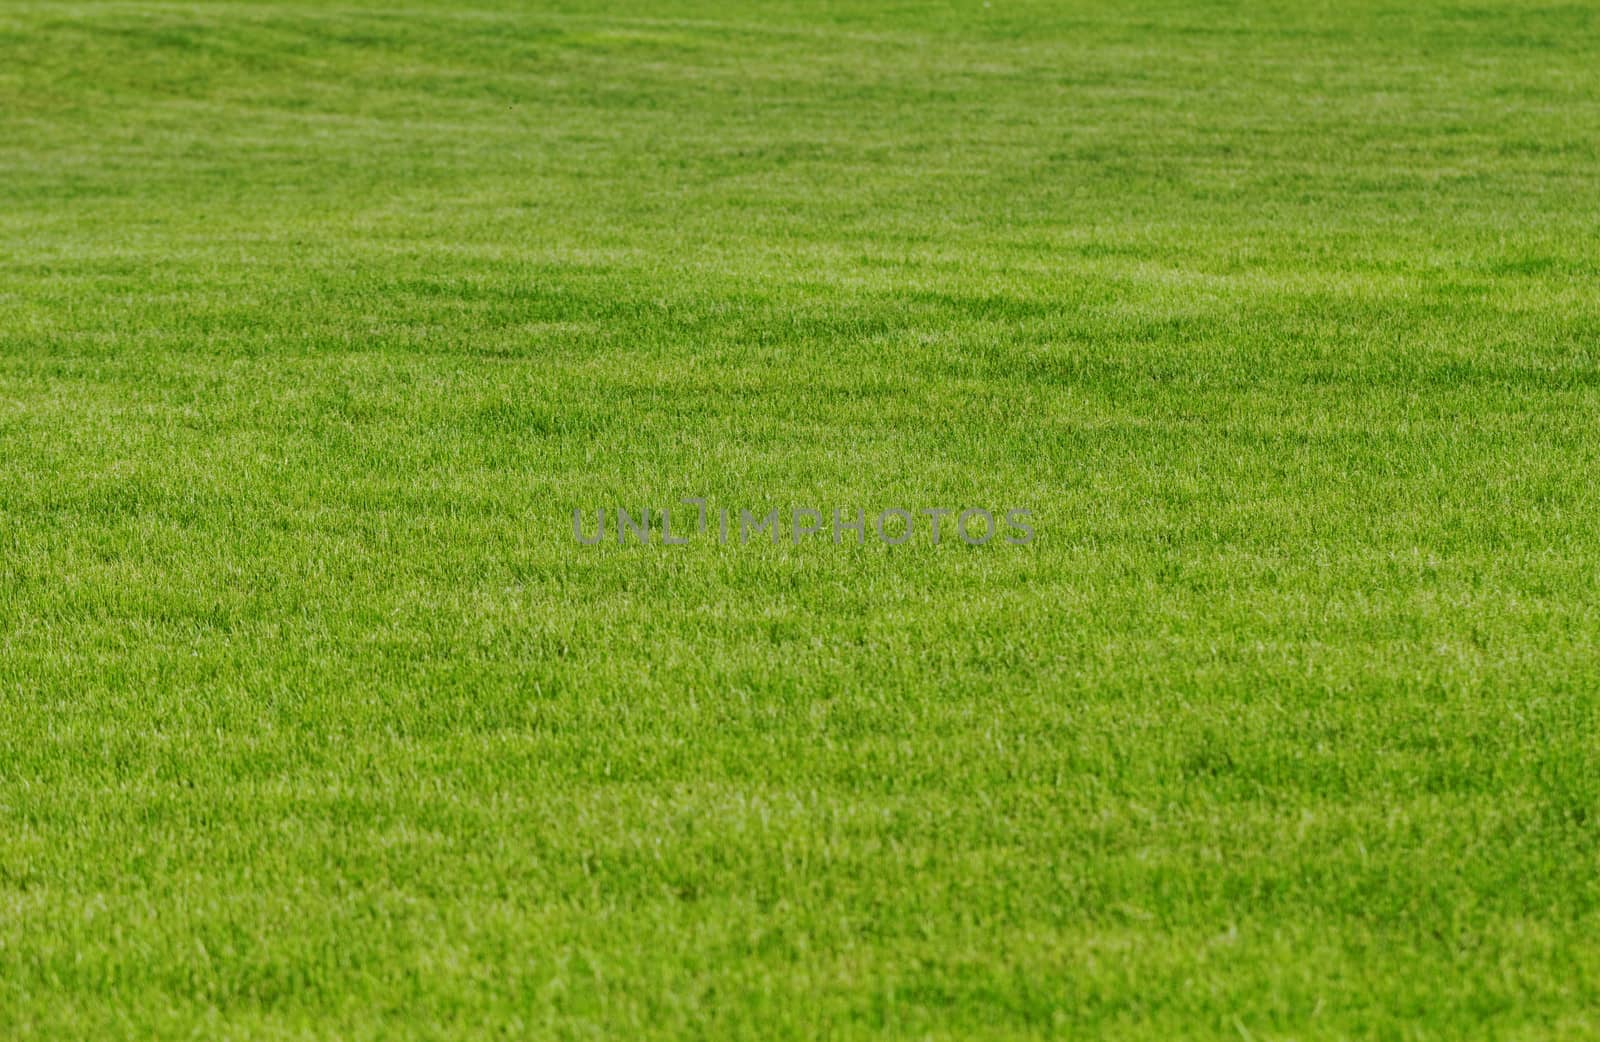 grass texture as background